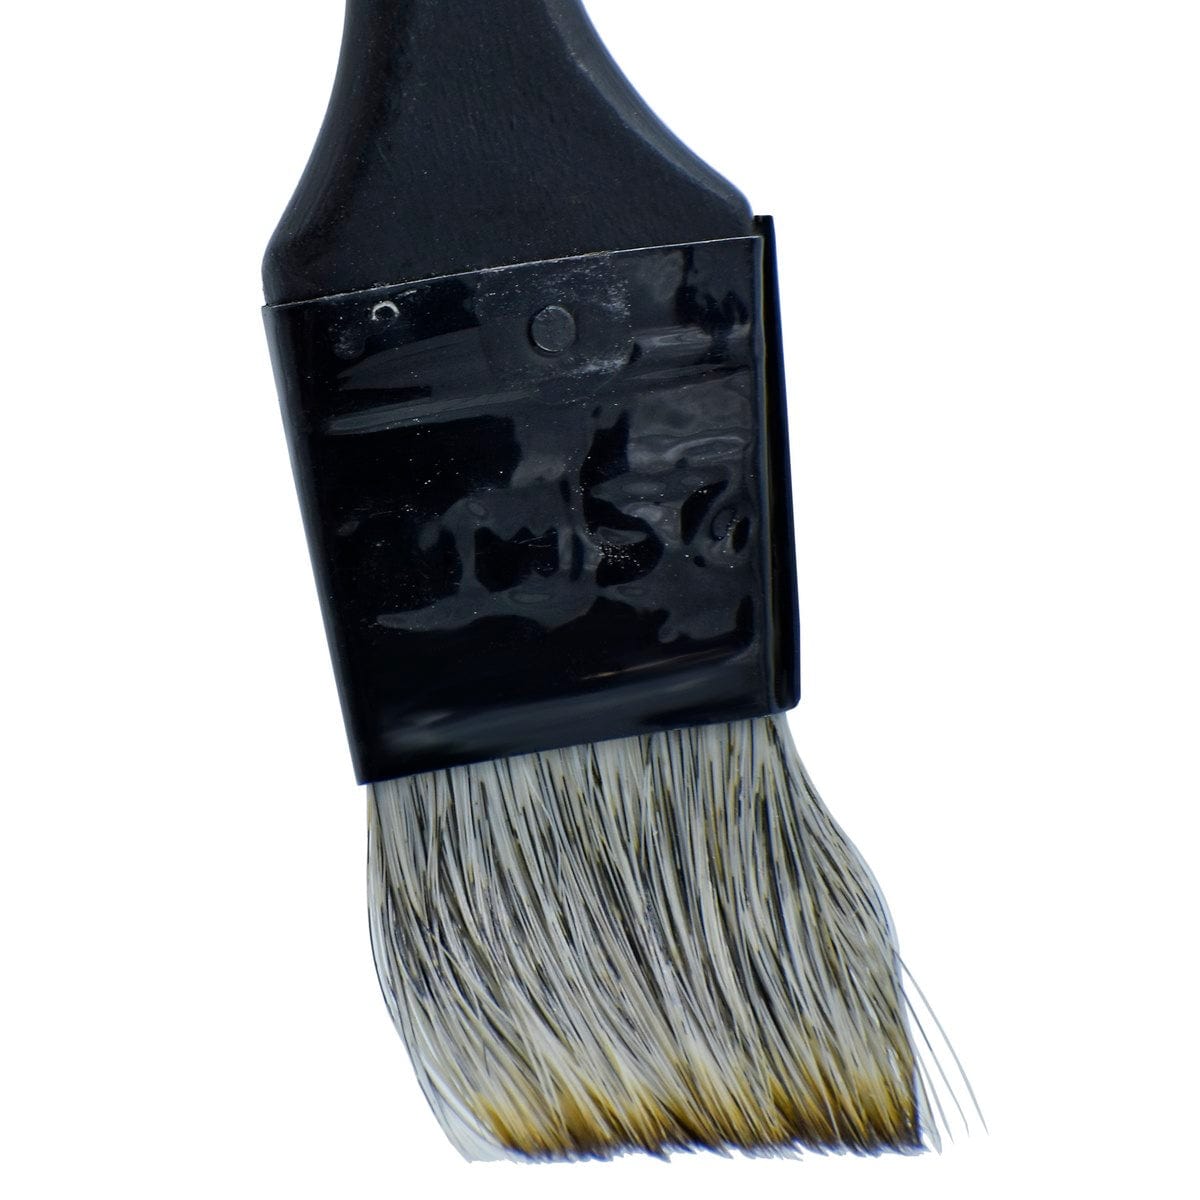 jags-mumbai Brush Deluxe Wash Brush: Synthetic Imitation Hair, Black Handle - 25MM